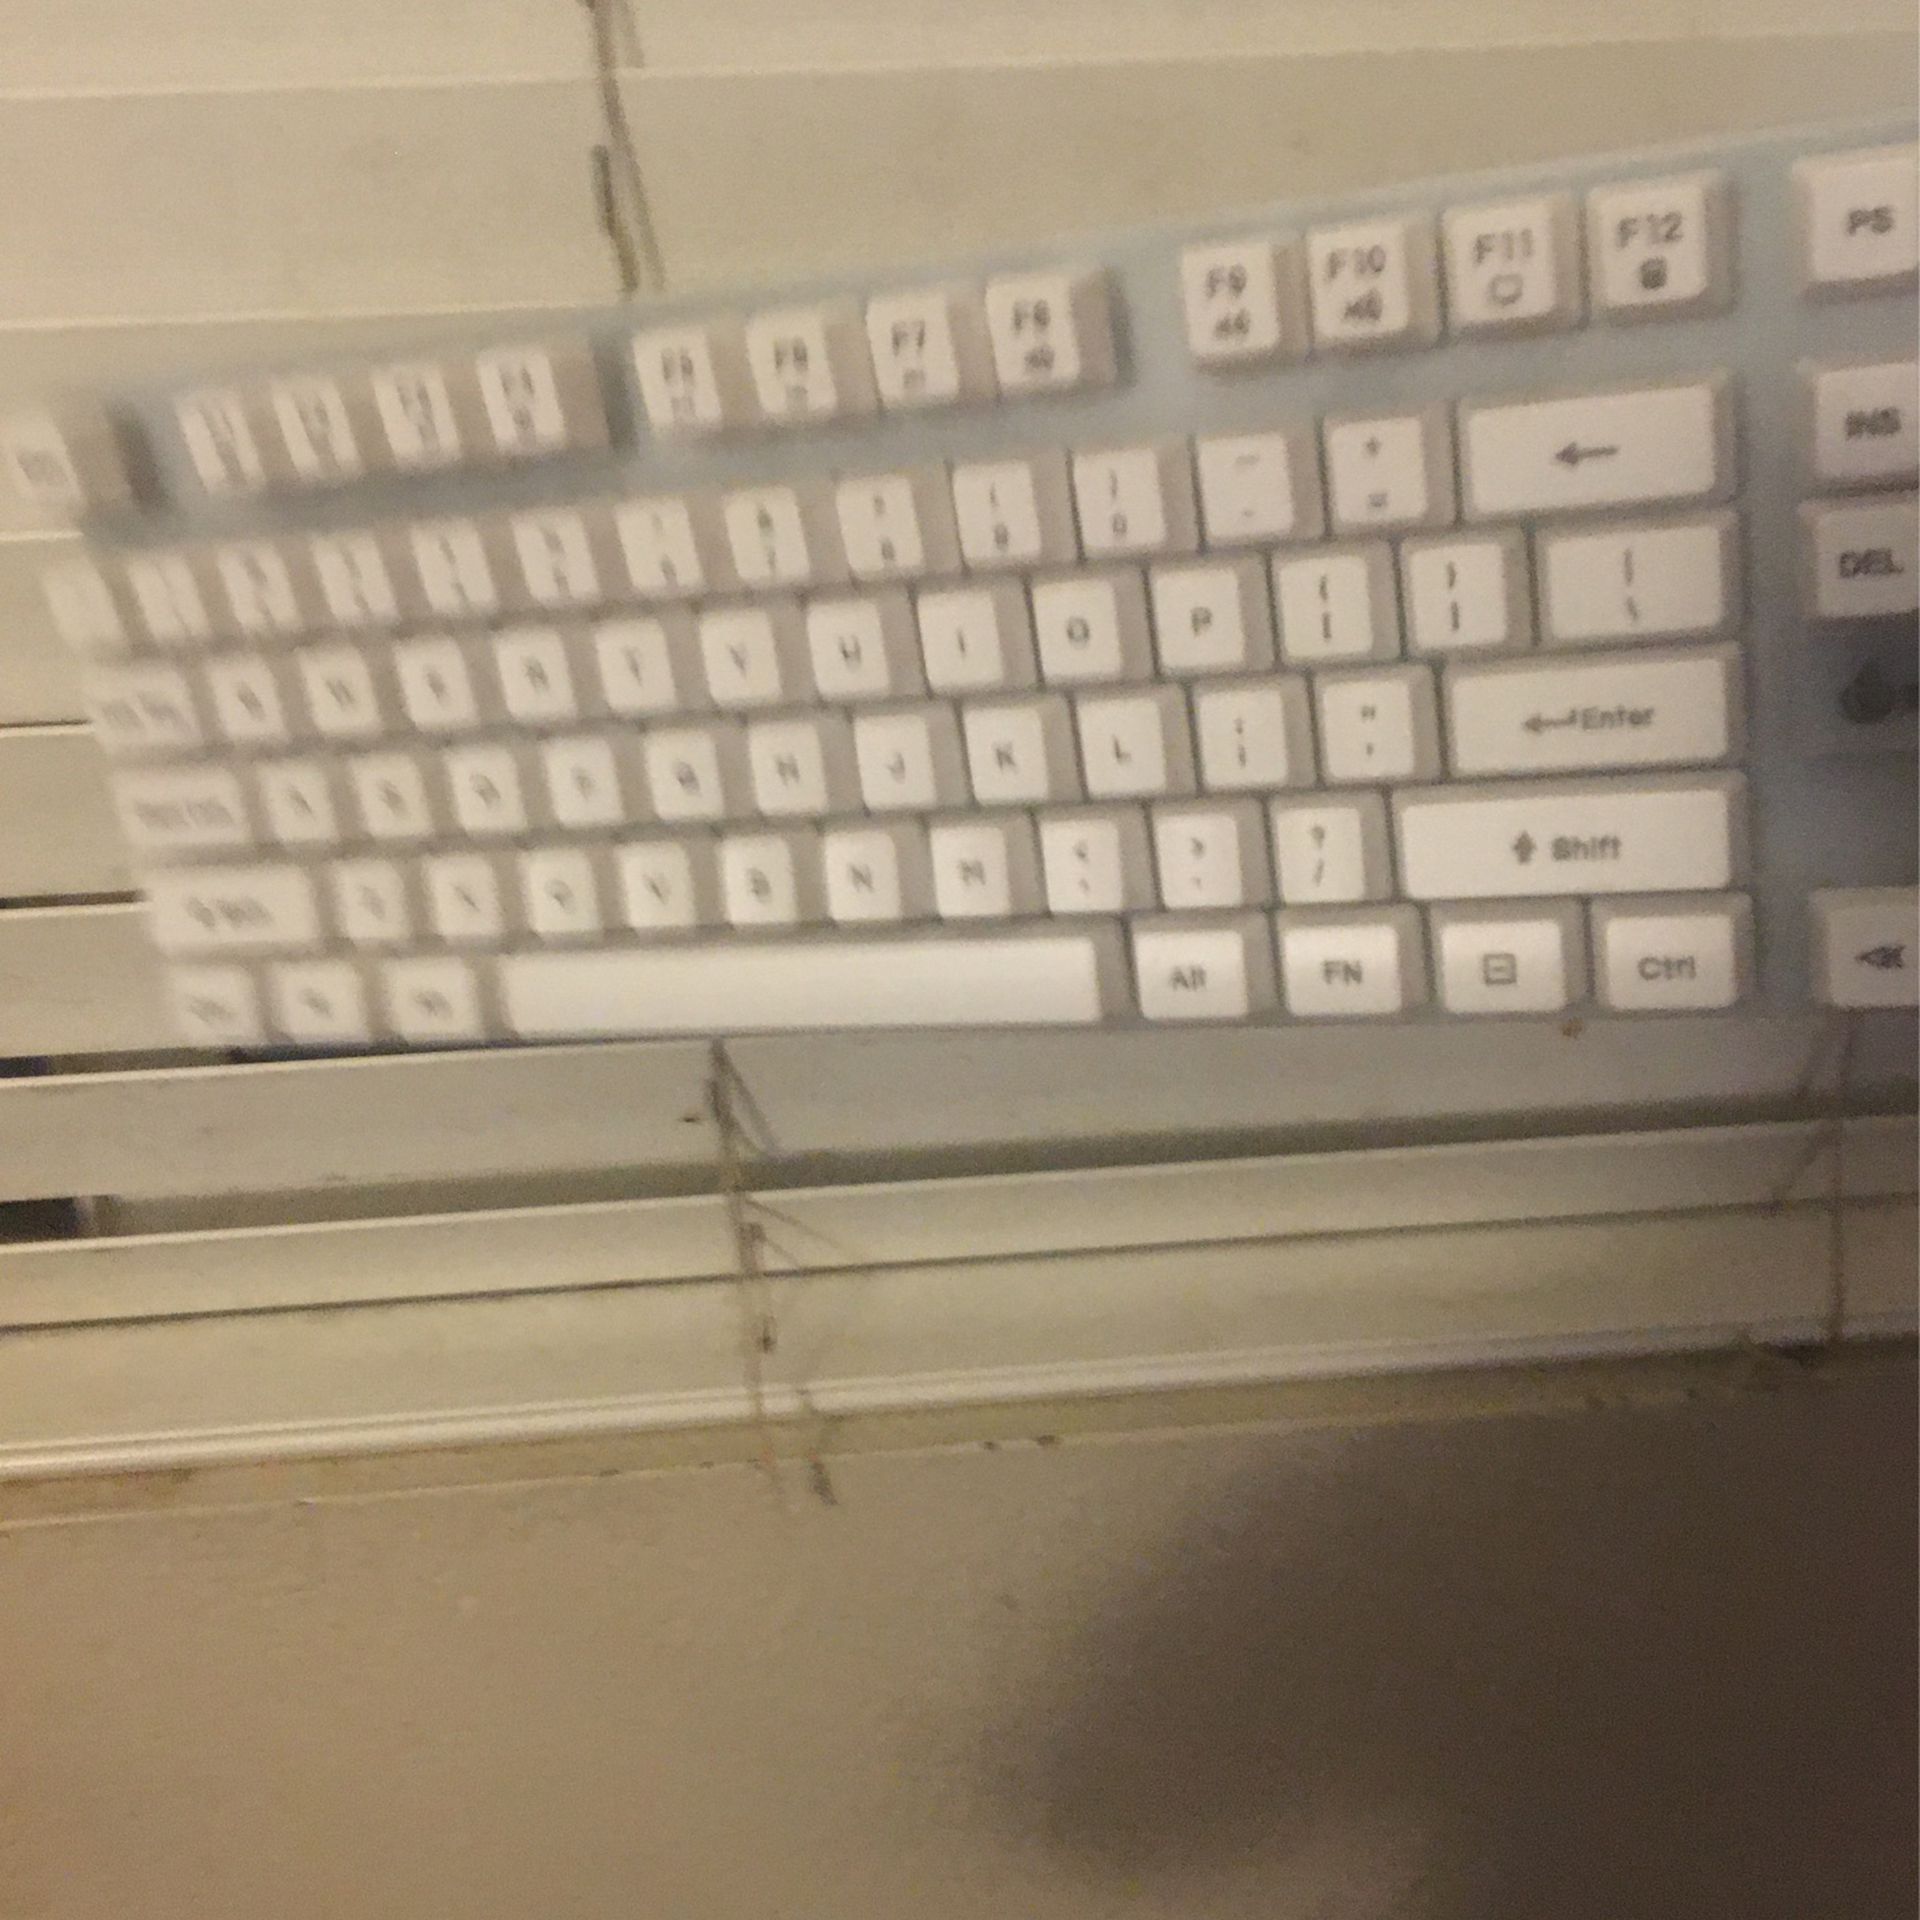 A Keyboard